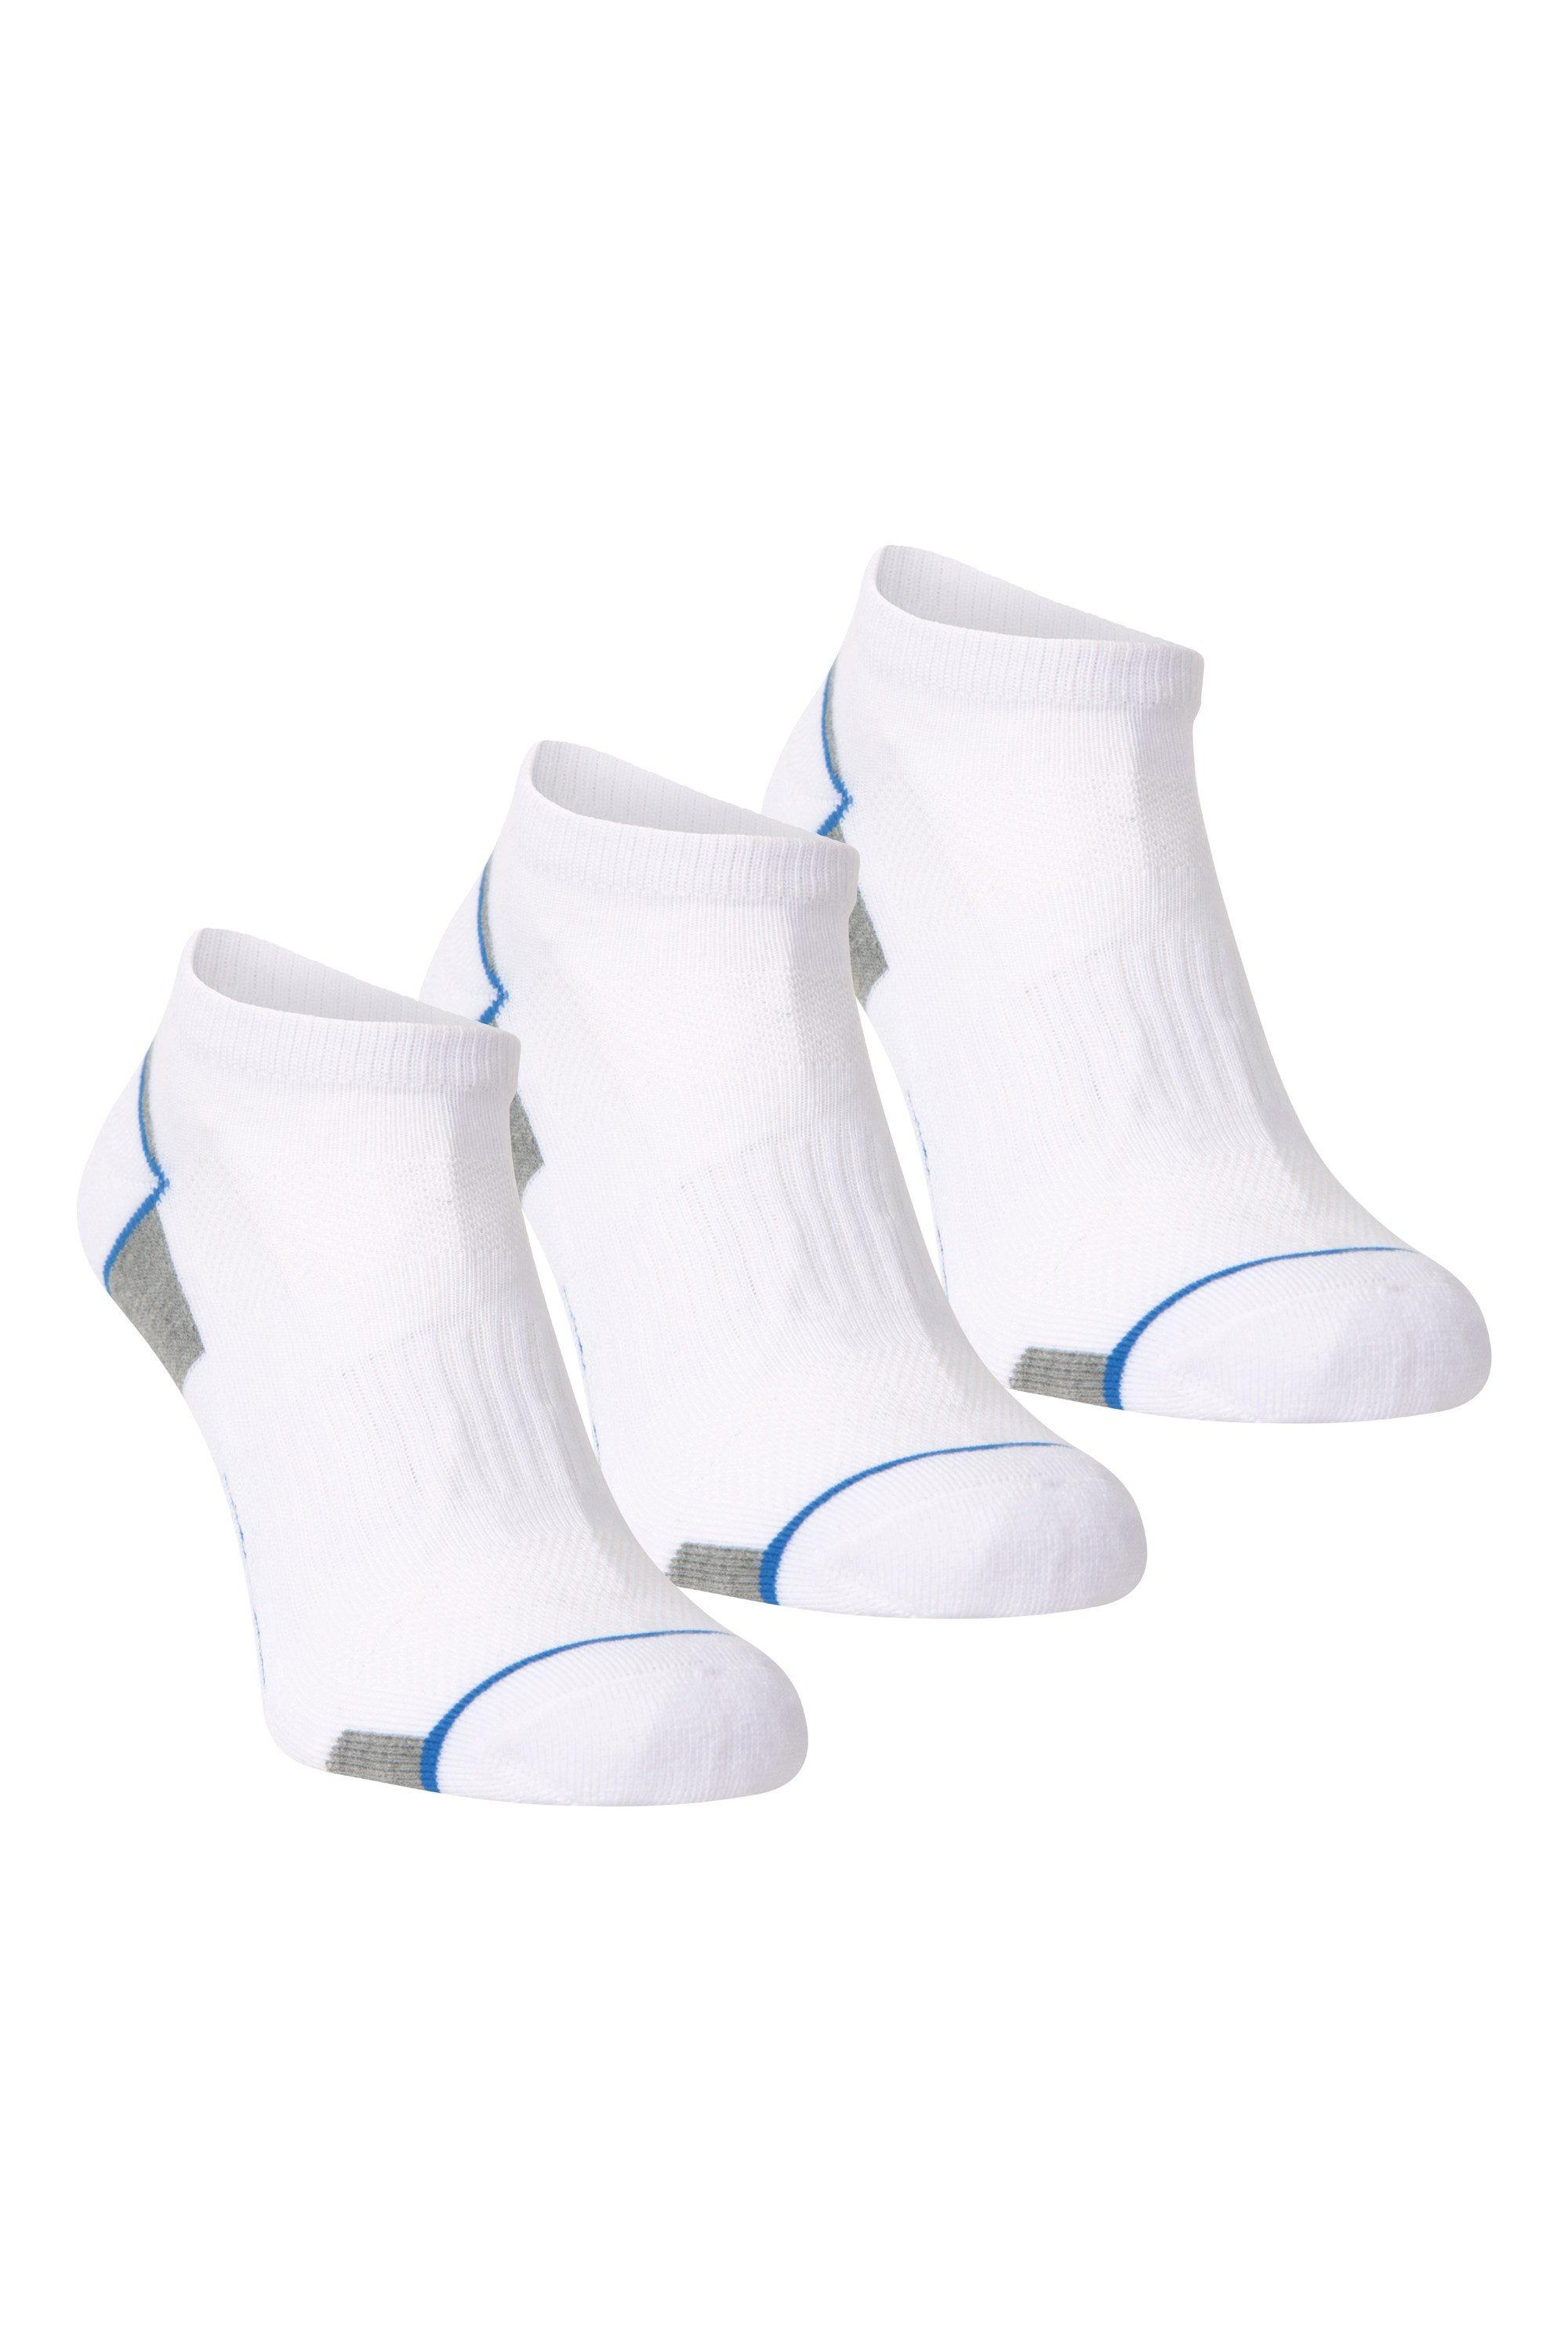 IsoCool Performance Sock Trainer Quick Dry Sports Socks